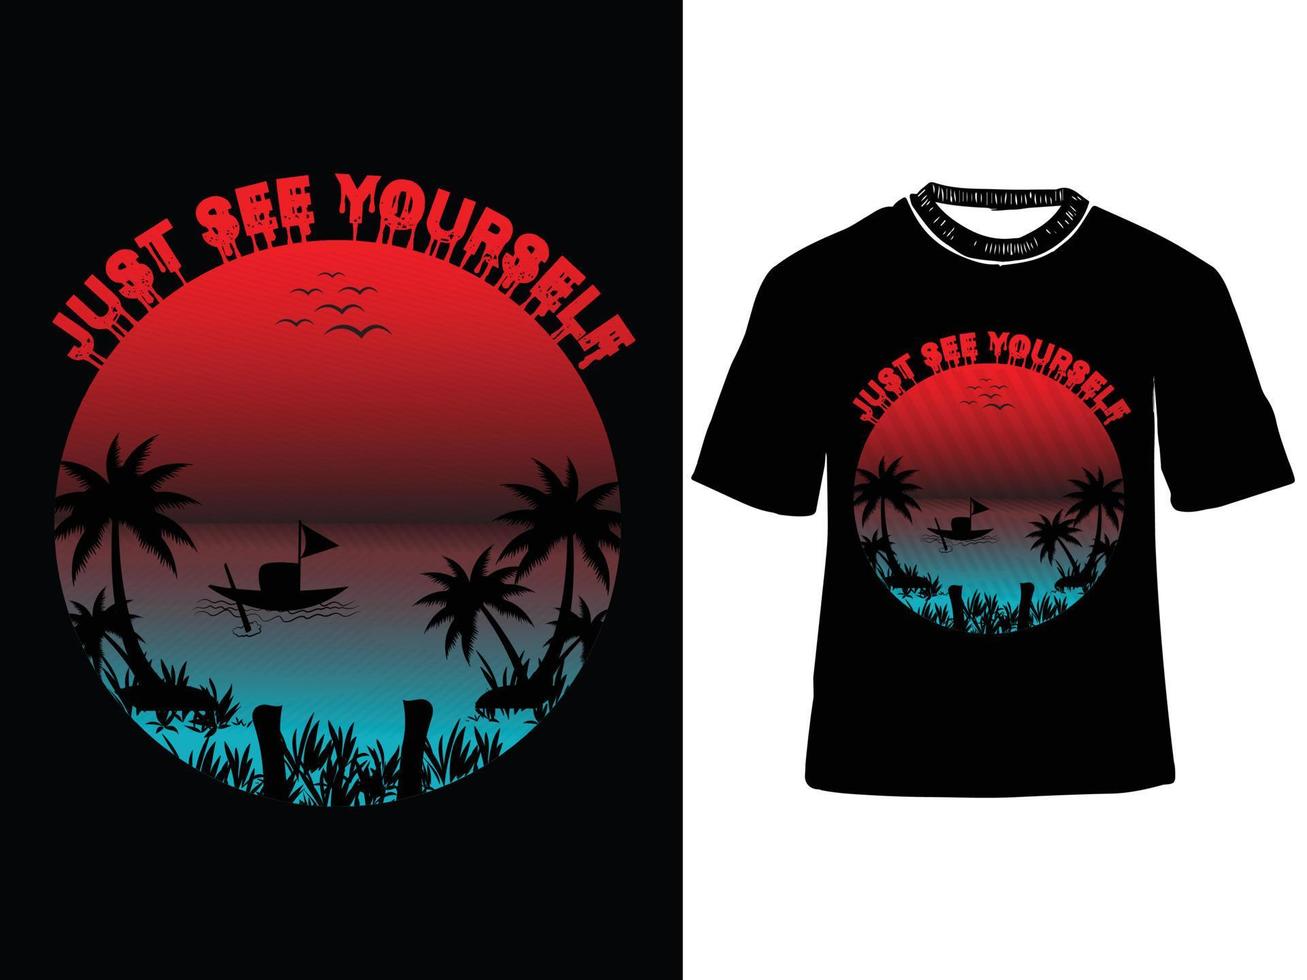 Surfing Sunset for T-Shirt Design, Surfing t-shirt, Sunset vector